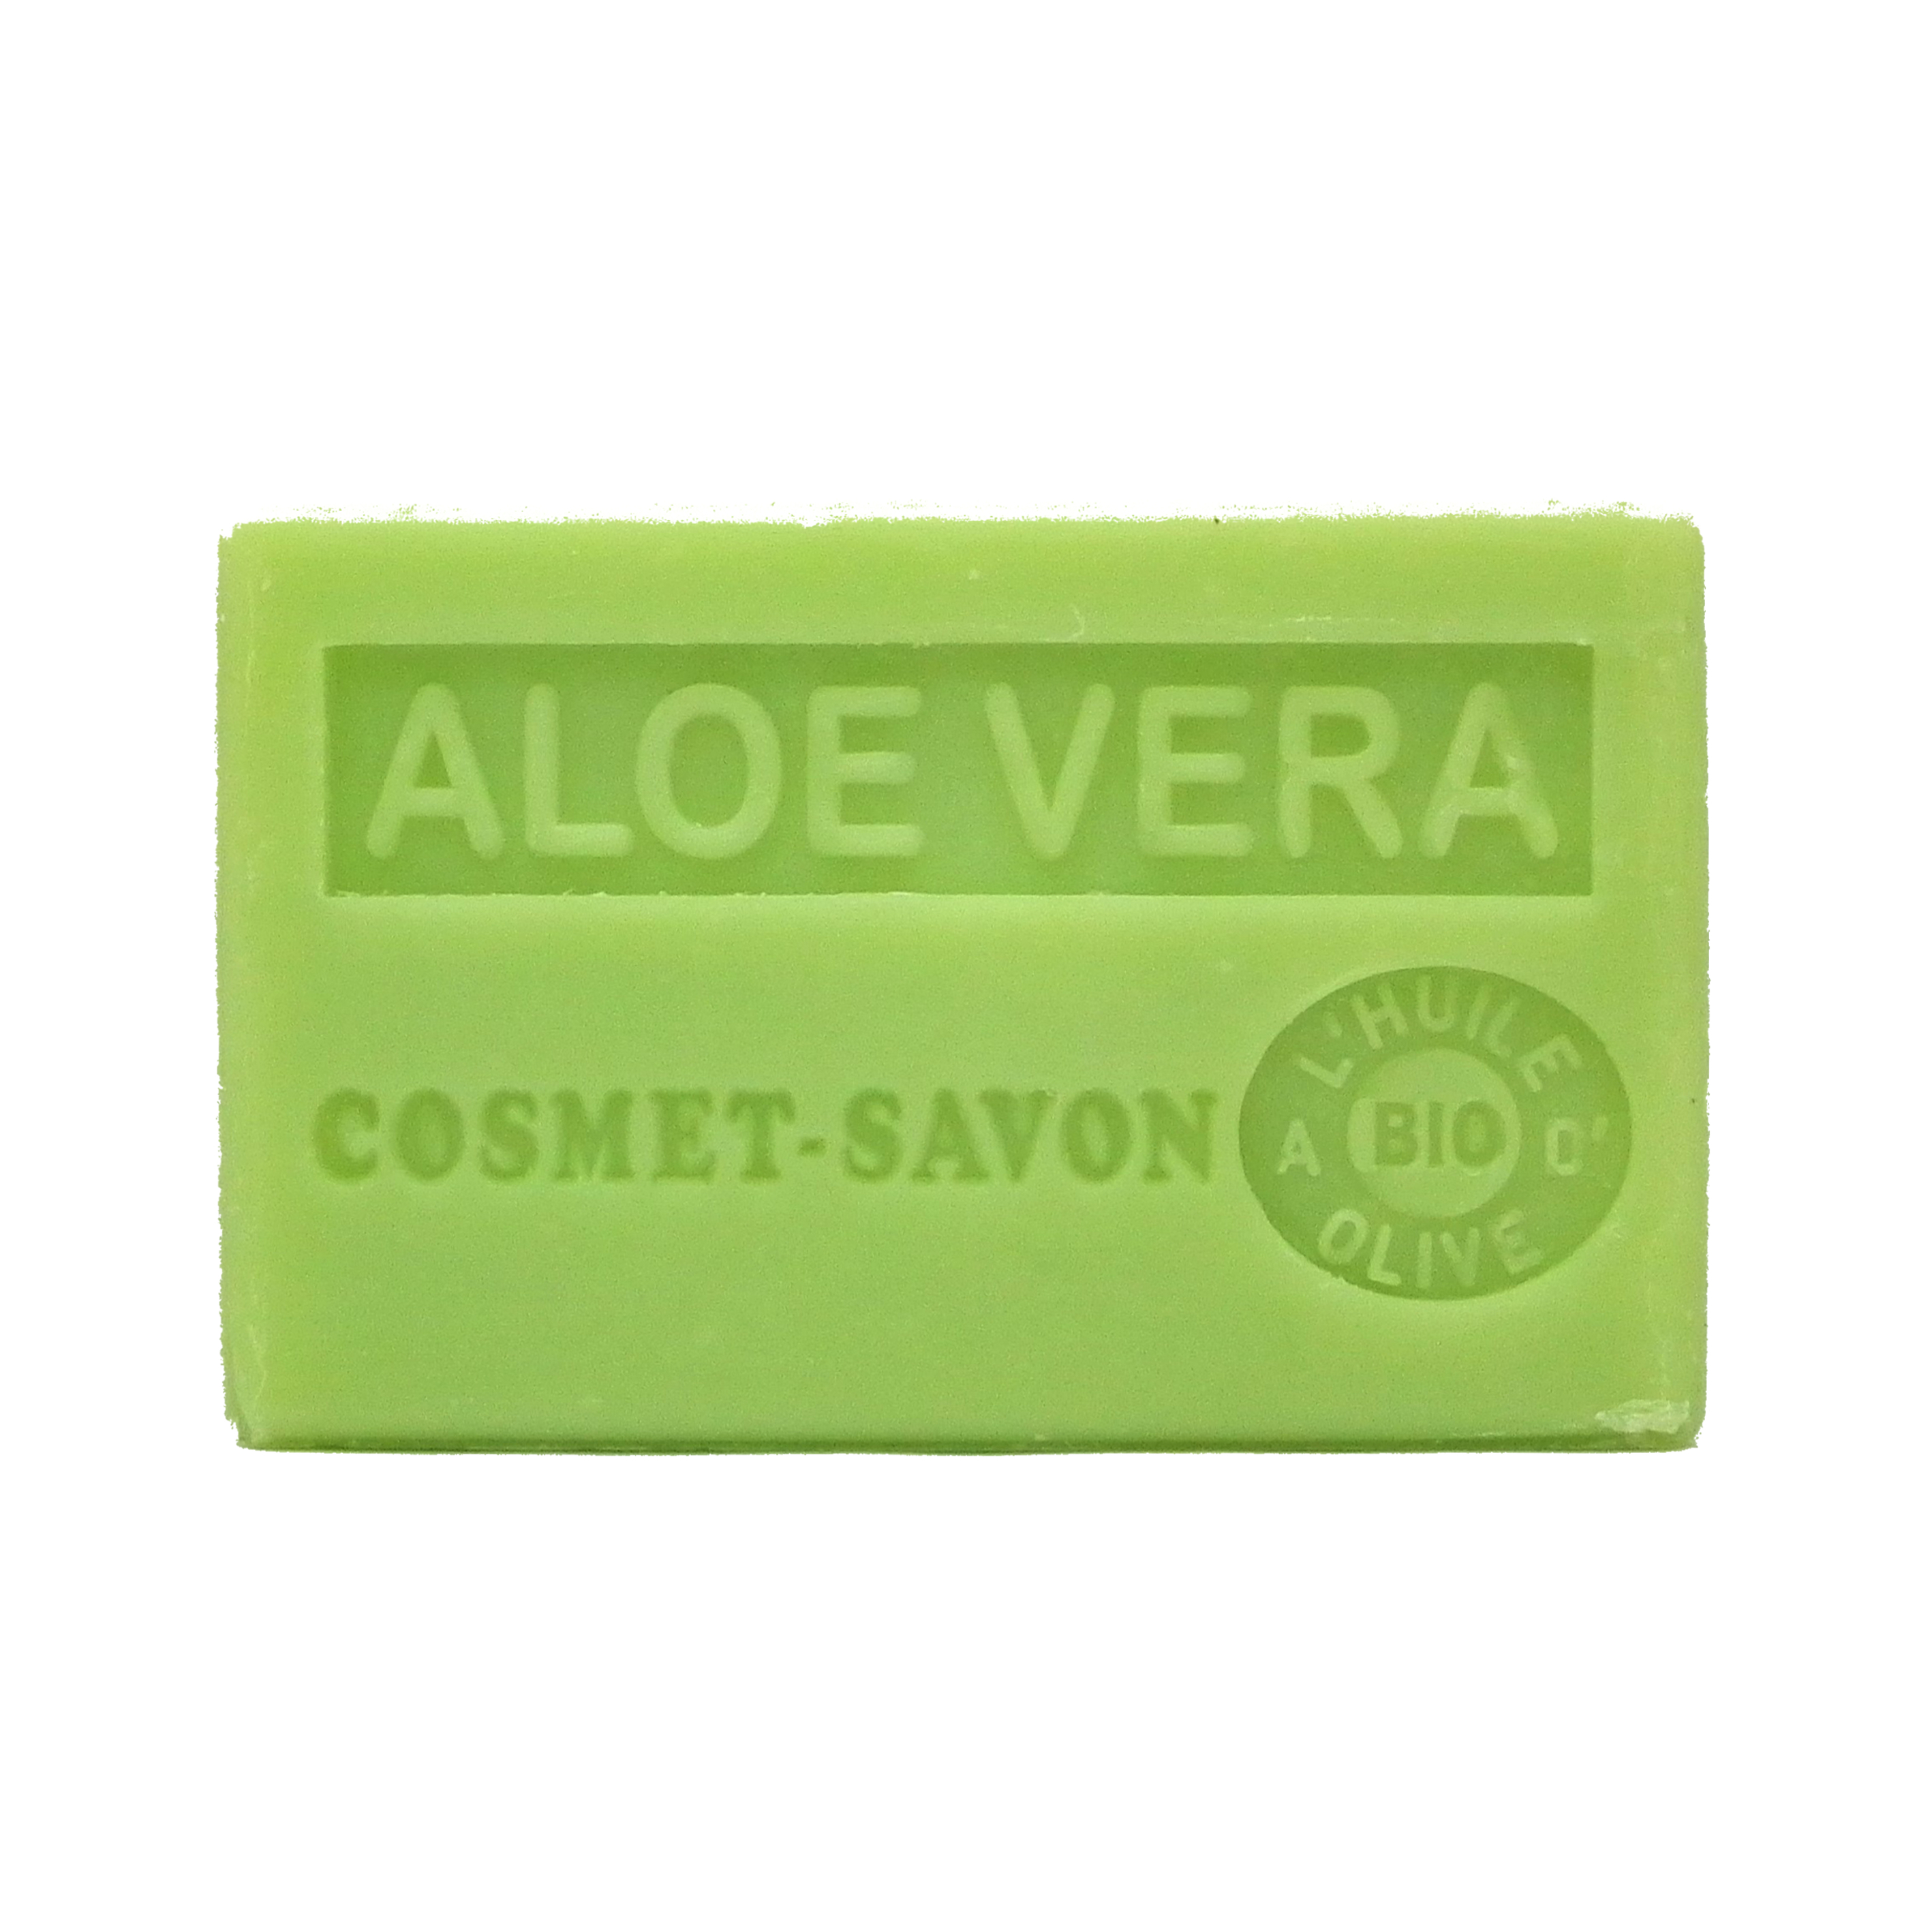 aloe-vera-savon-125gr-au-beurre-de-karite-bio-cosmet-savon-3665205006027-face-JPEG